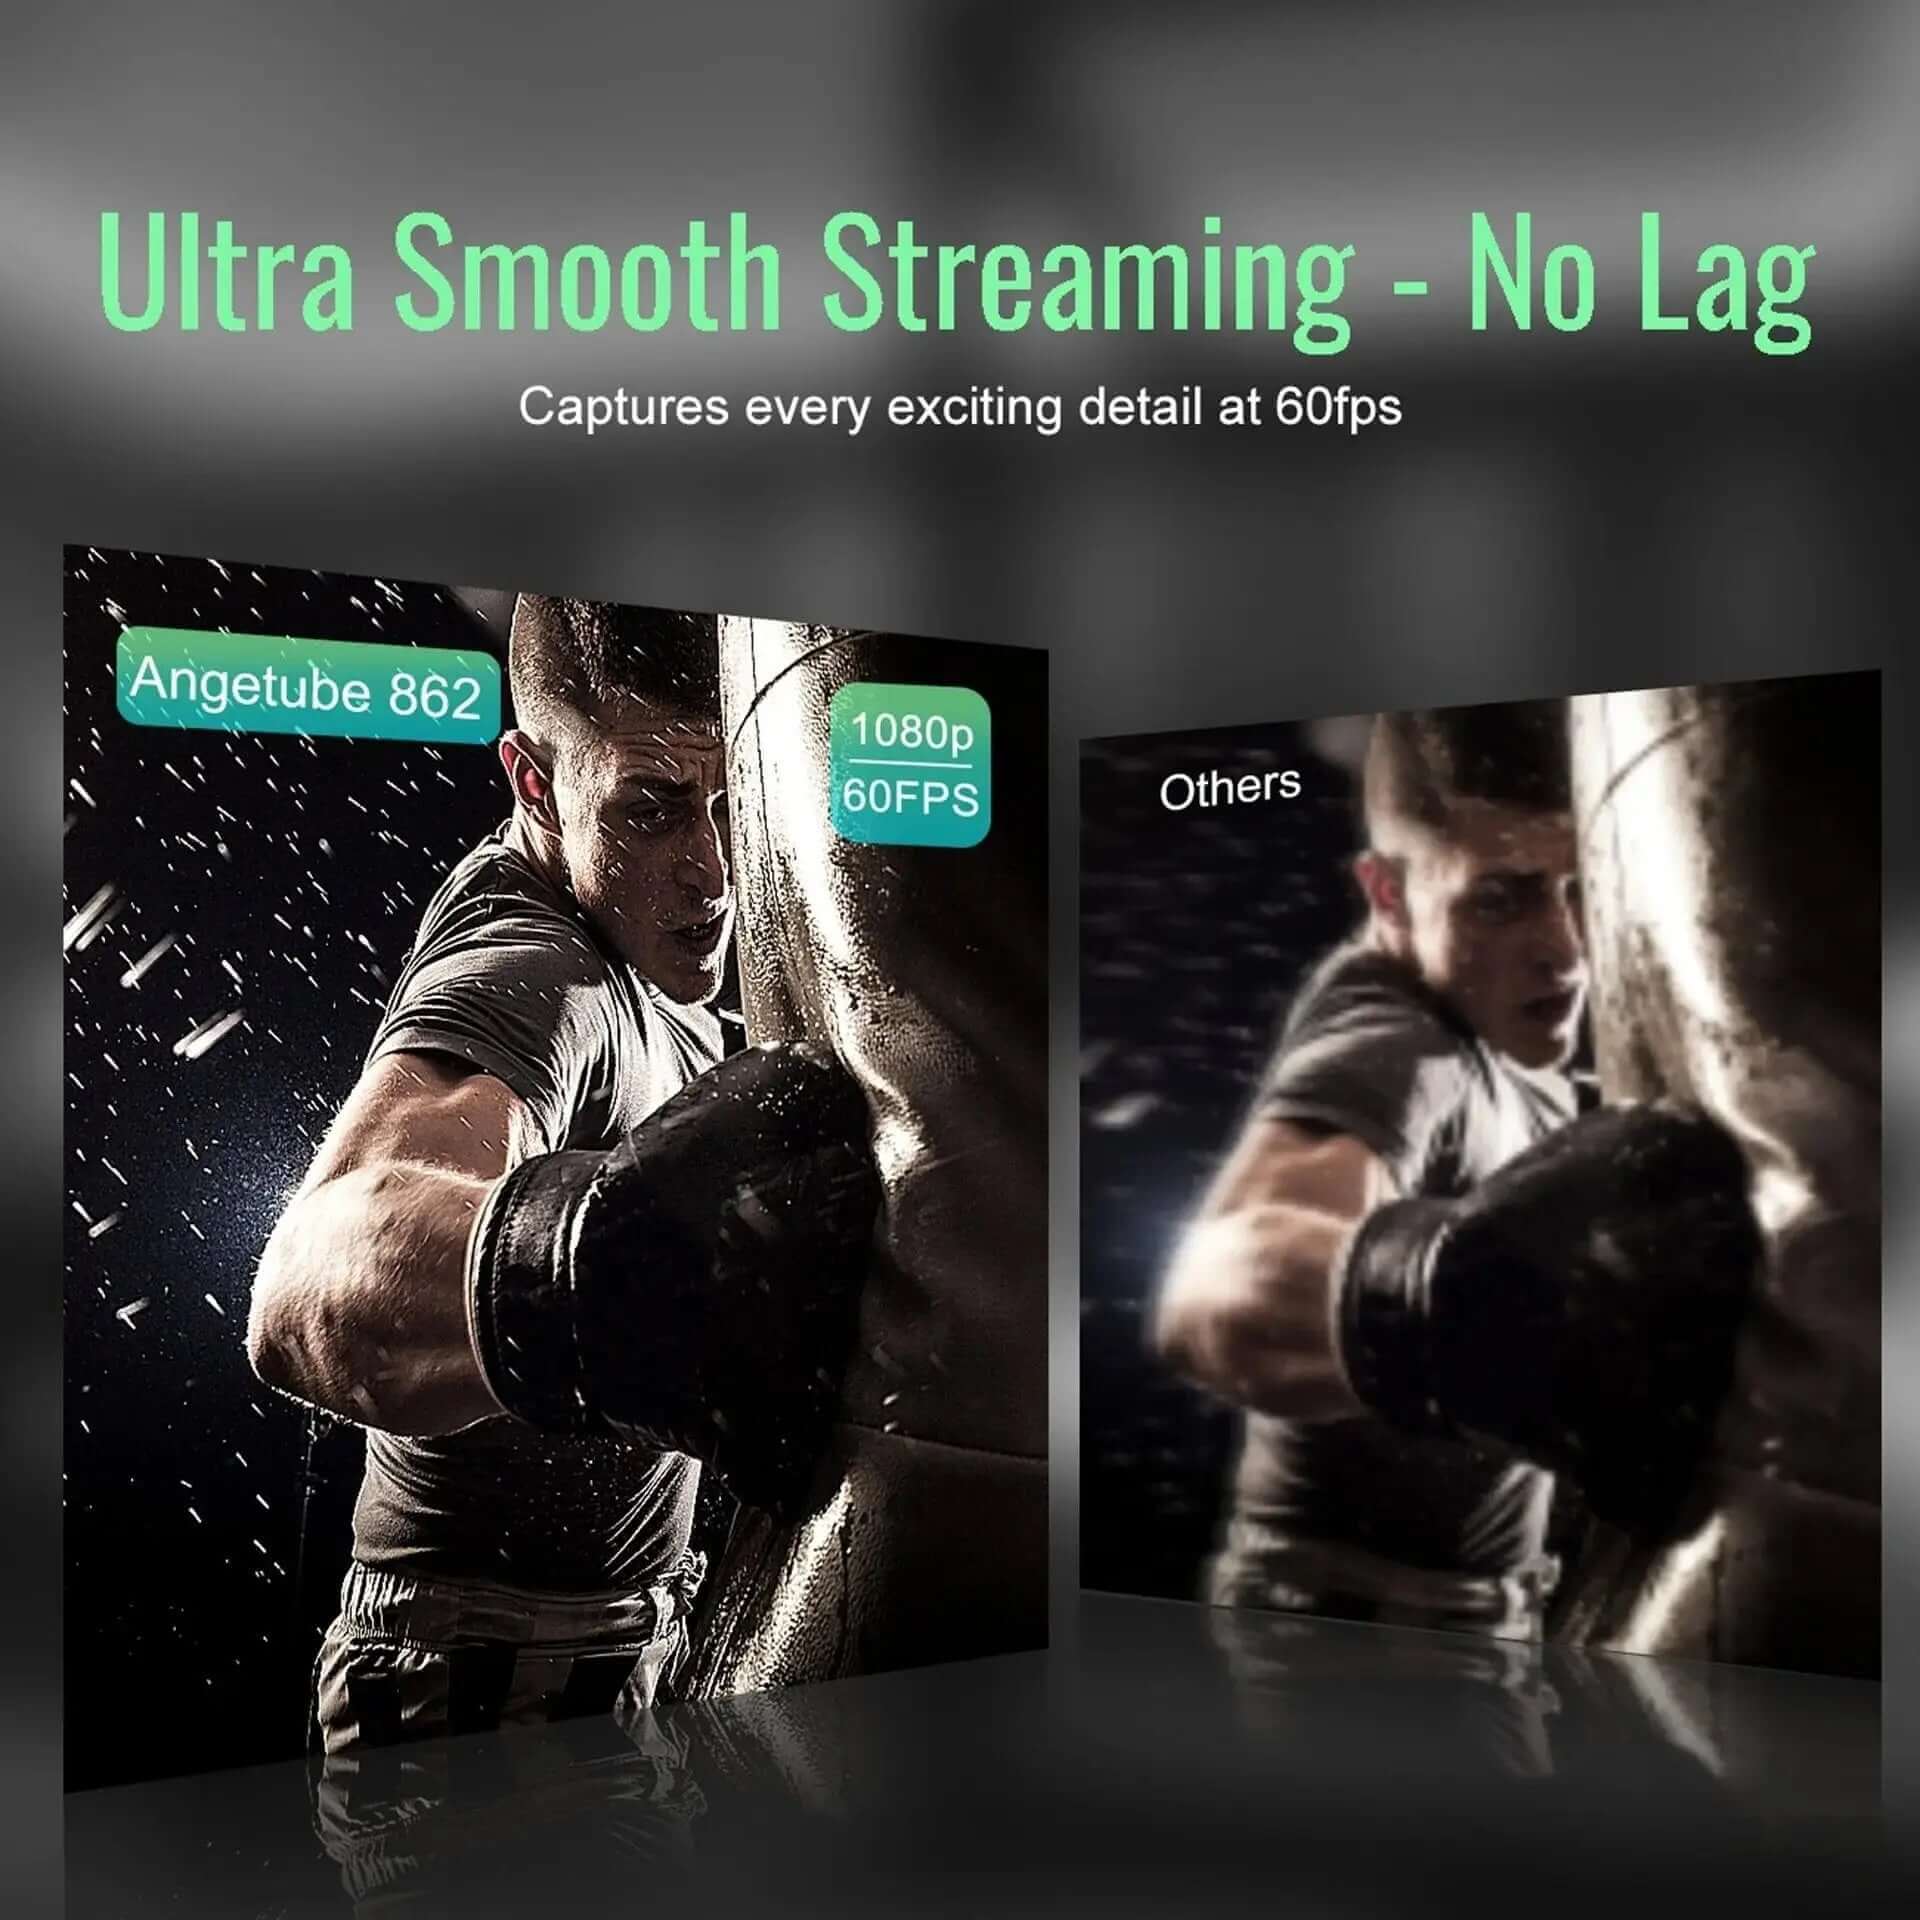 Ultra Smooth Streaming - No Lag